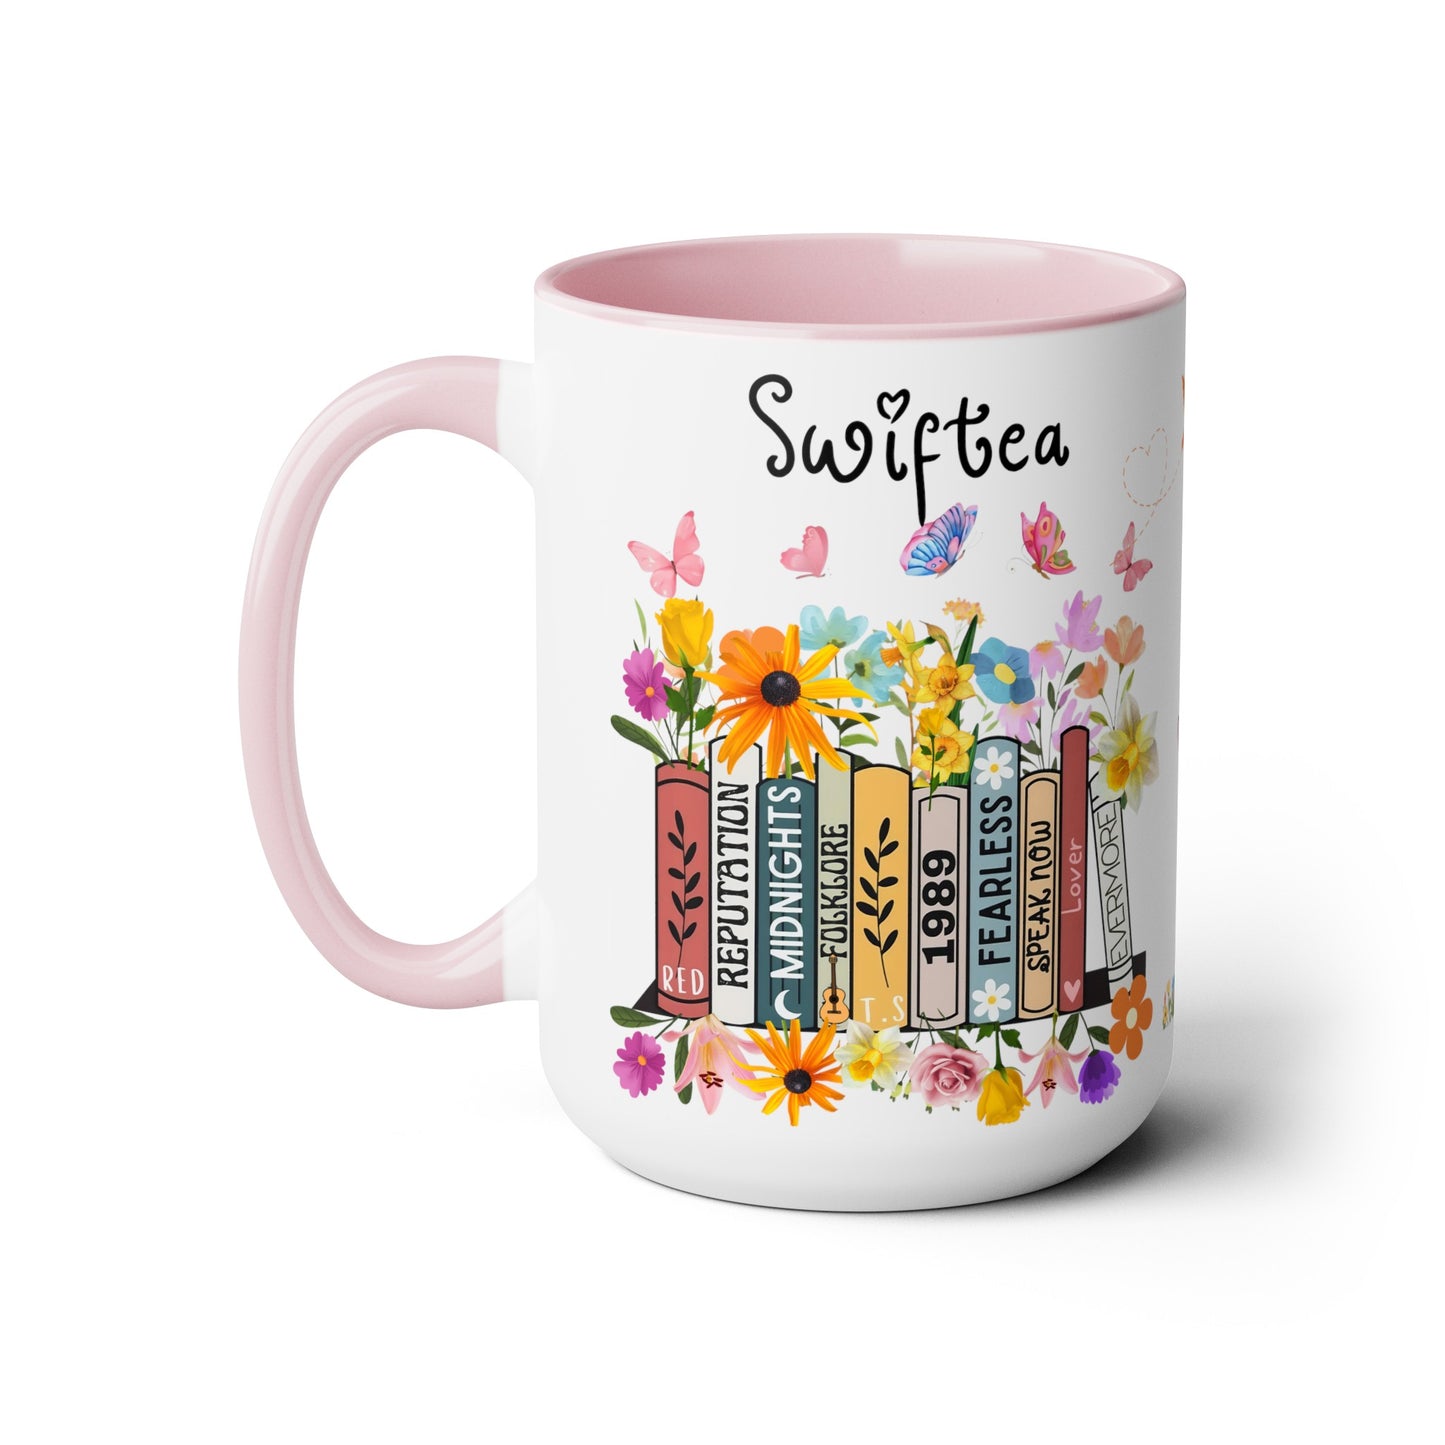 Swiftea Coffee Mug| Swiftie Coffee Cup| Taylor Coffee Cup 15oz| Taylor Mug| Music Album As Books| Swiftie Cup| Girl Fans Merch| Taylor Album